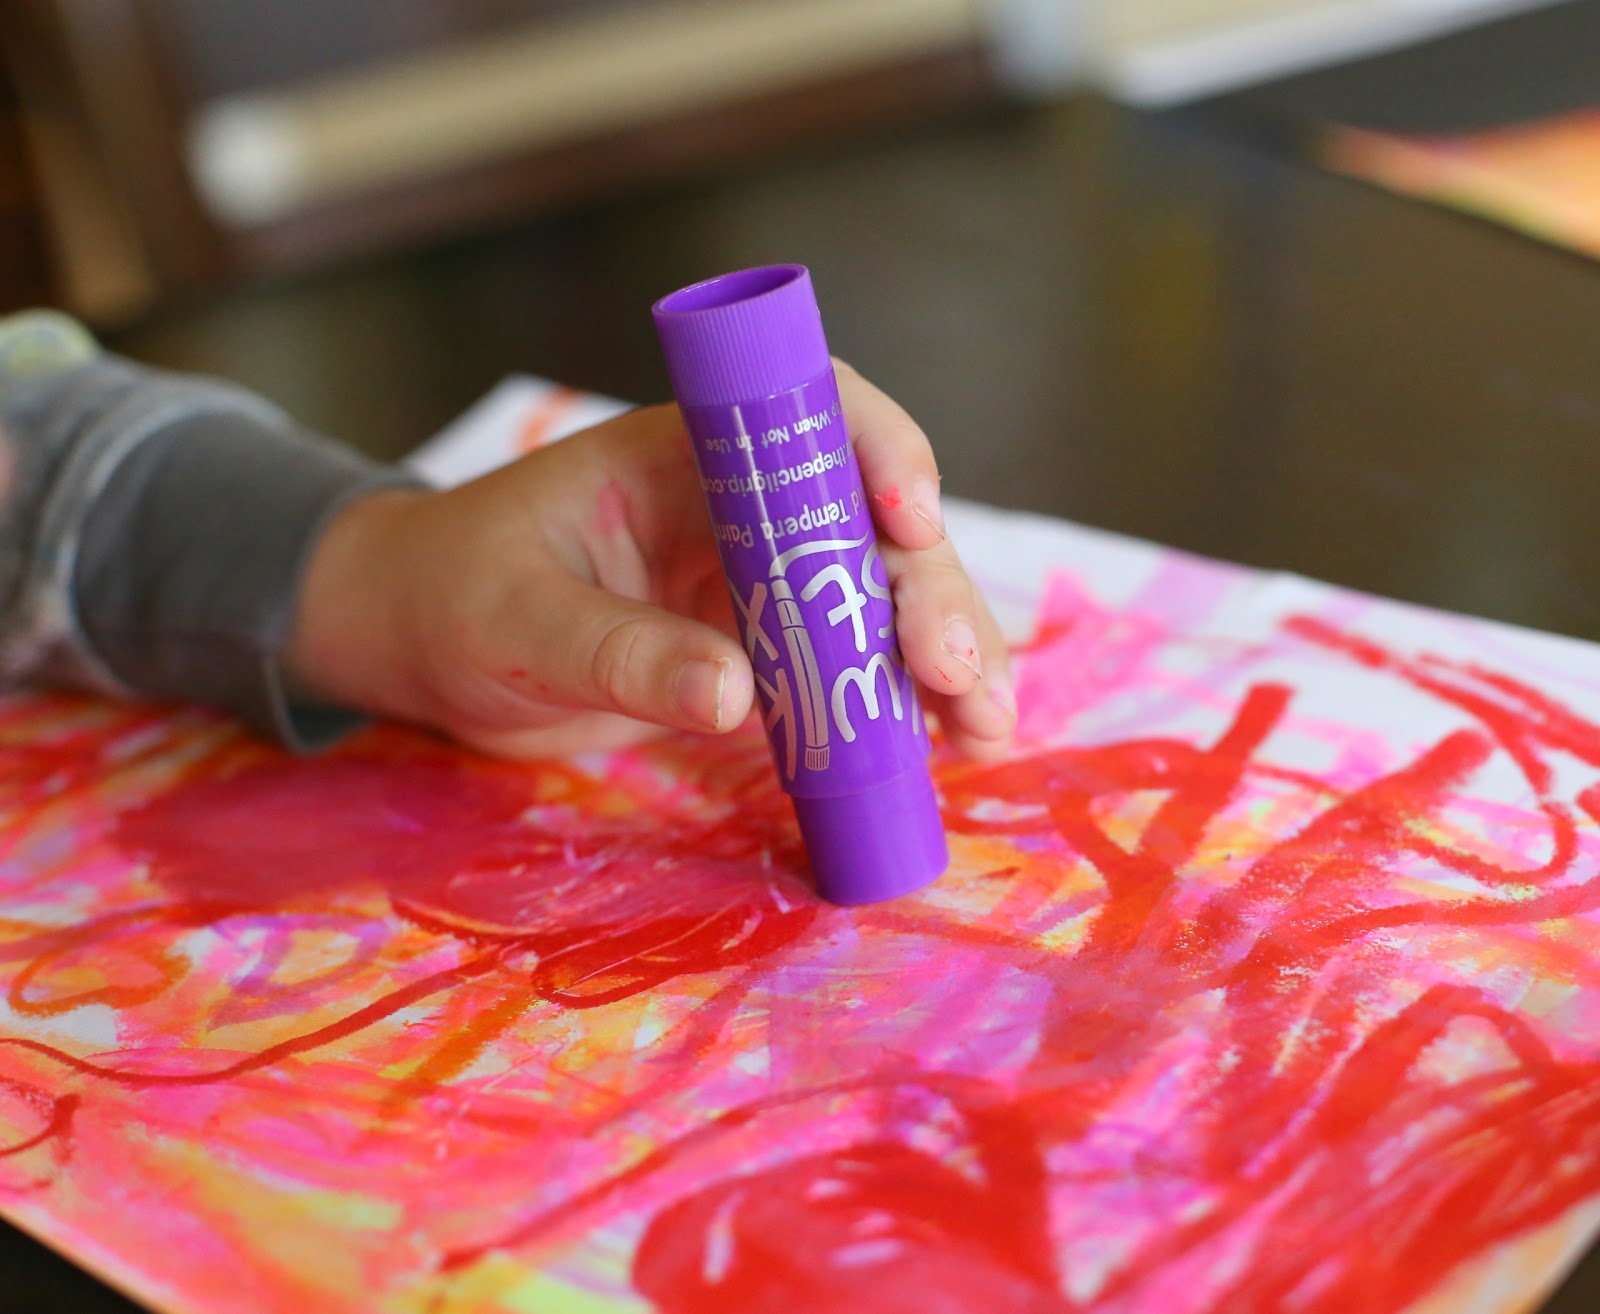 The Pencil Grip Pastel Tempera Paint Sticks